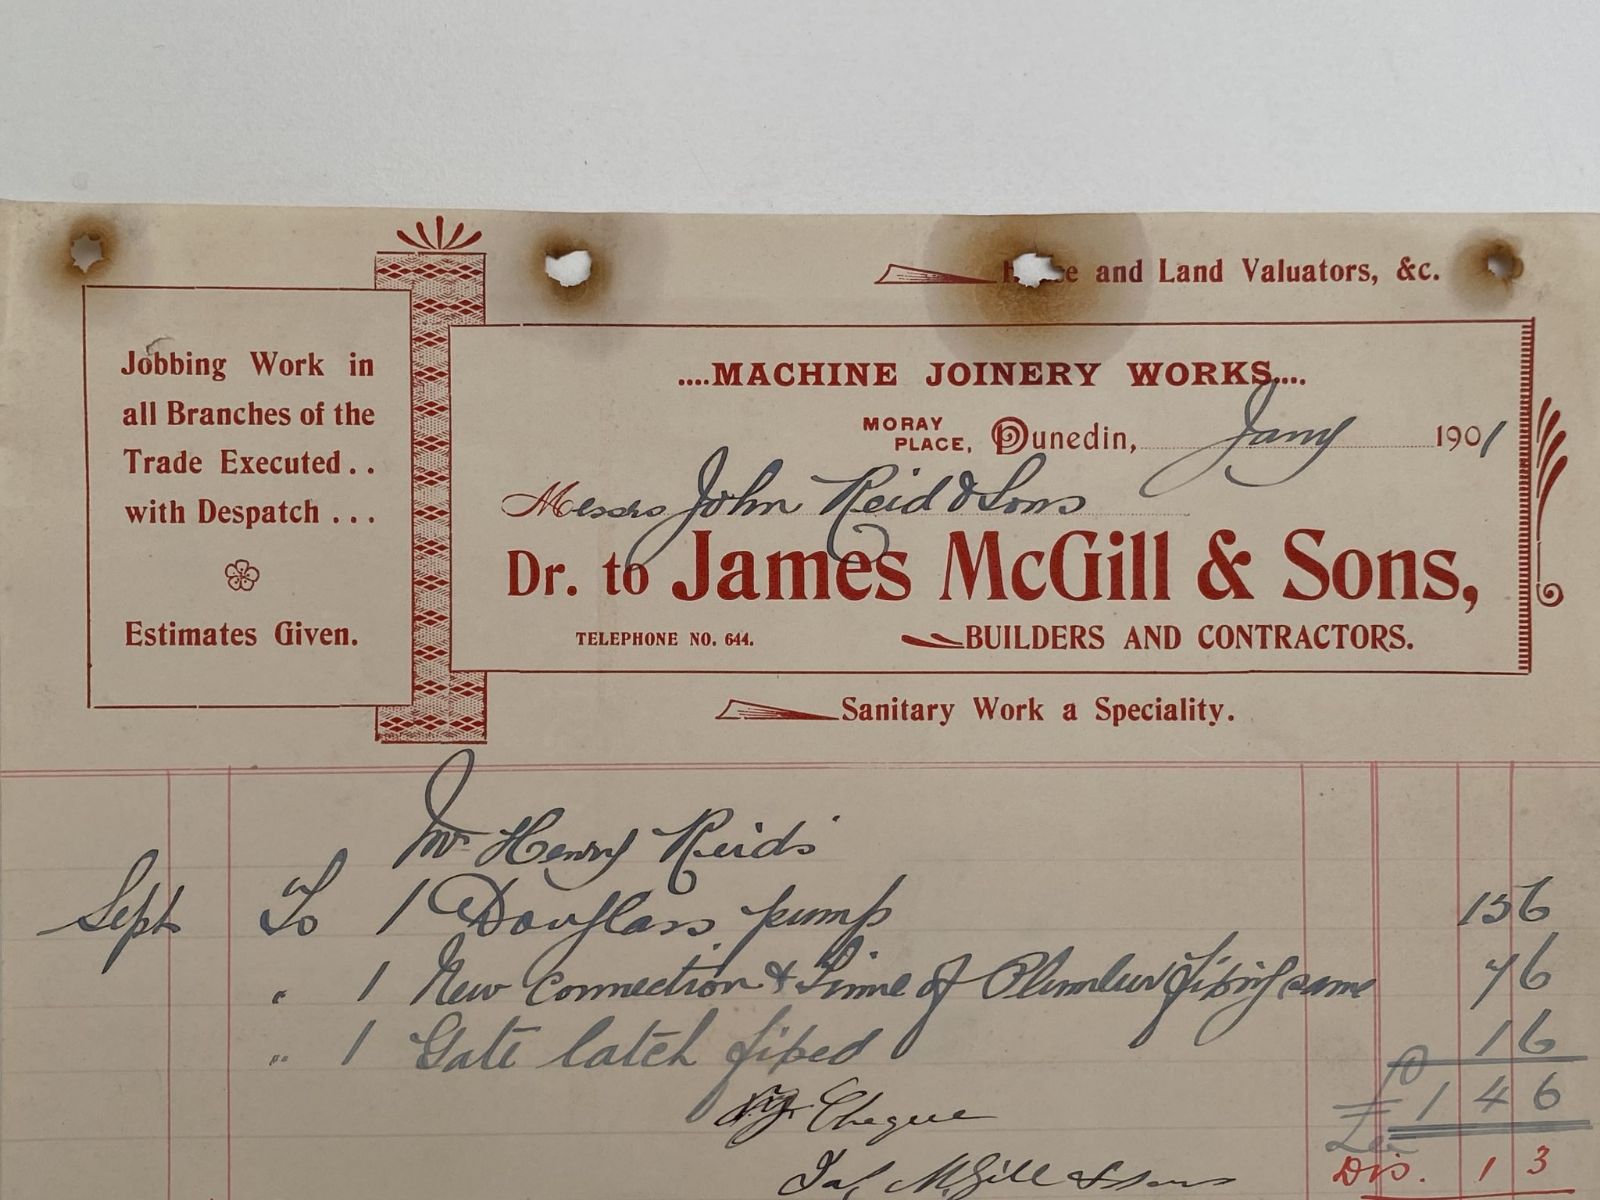 OLD INVOICE: James McGill & Sons, Dunedin - Builders & Contractors 1901 (121 yo)